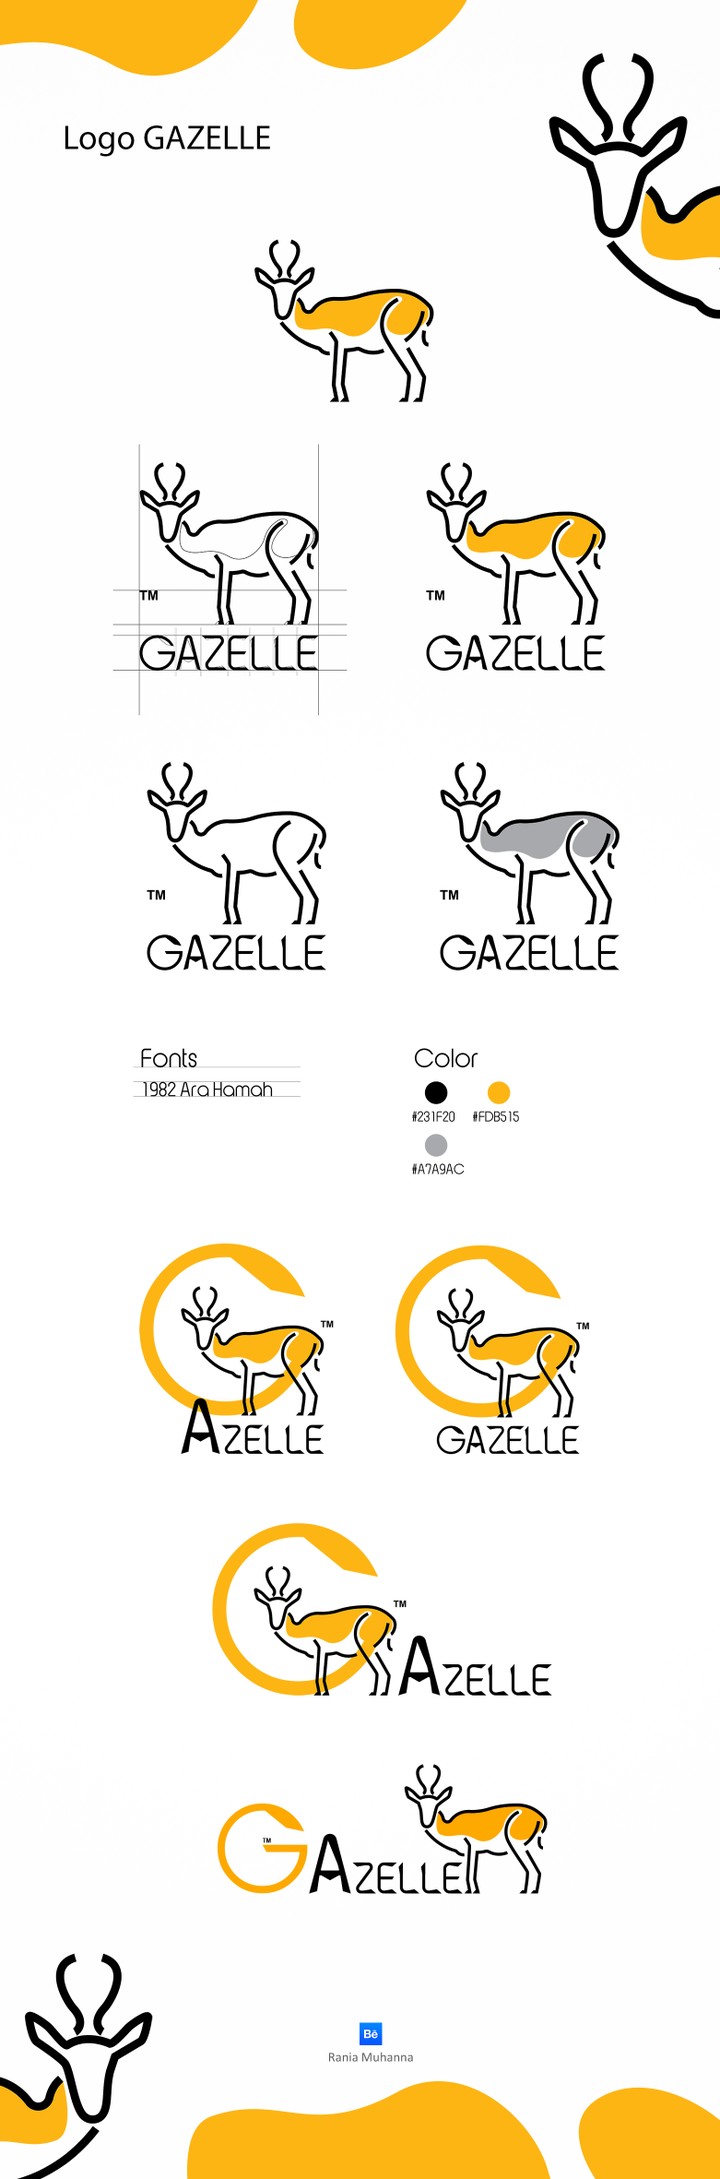 شعار GAZELLE